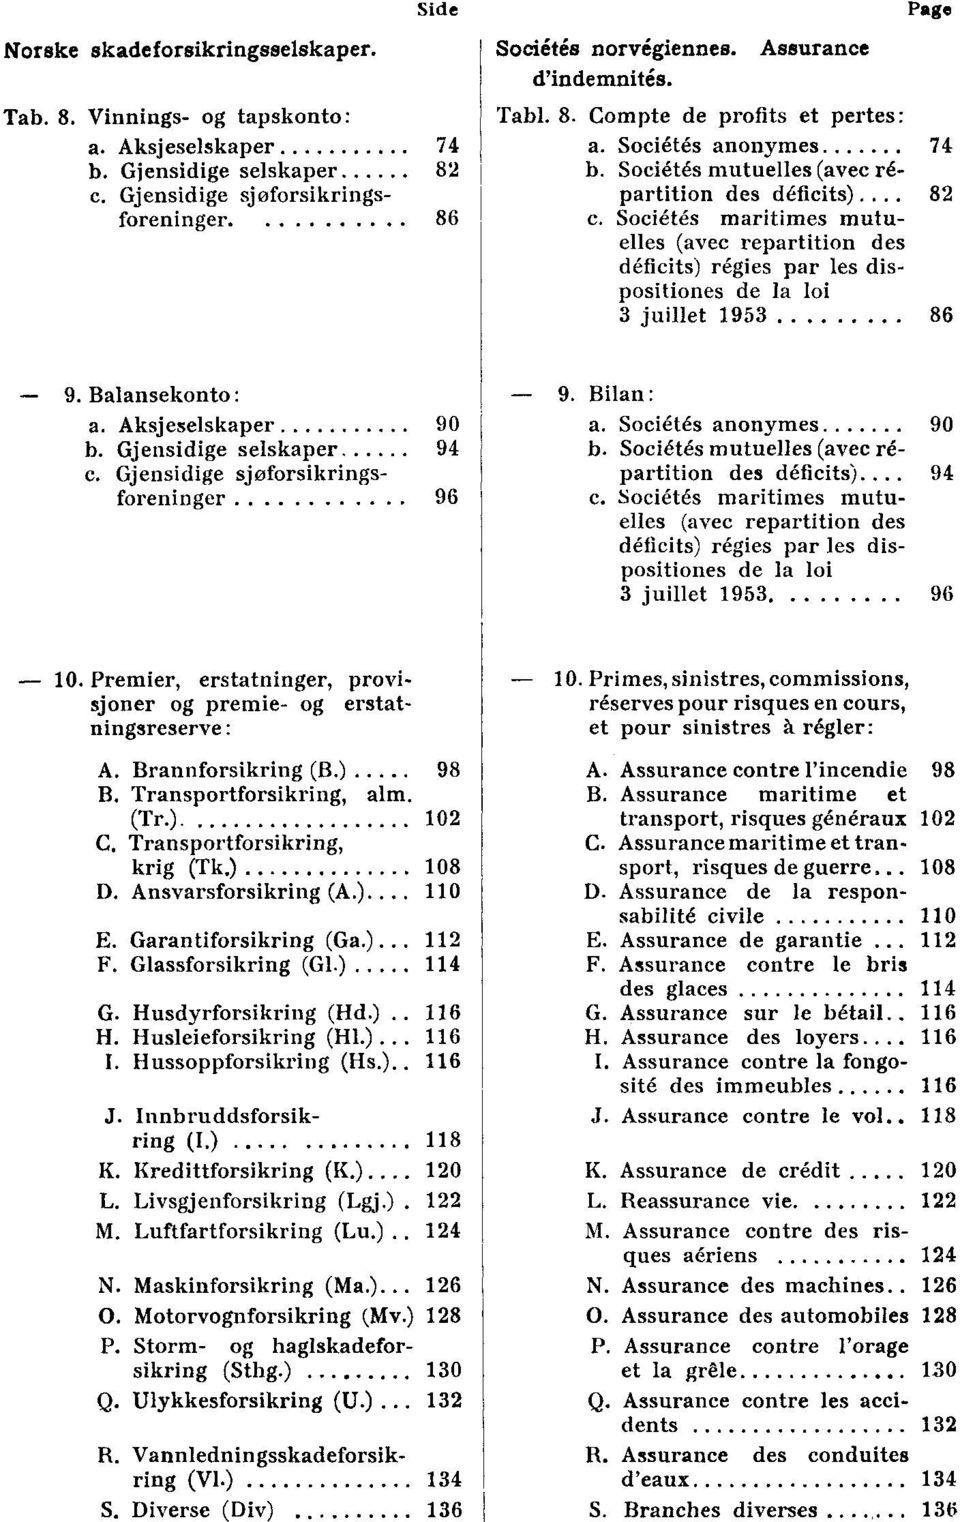 Societes maritimes mutuelles (avec repartition des deficits) regies par les dispositiones de la løj 3 juillet 193 86 9. Balansekonto : a. Aksjeselskaper 90 b. Gjensidige selskaper 94 c.